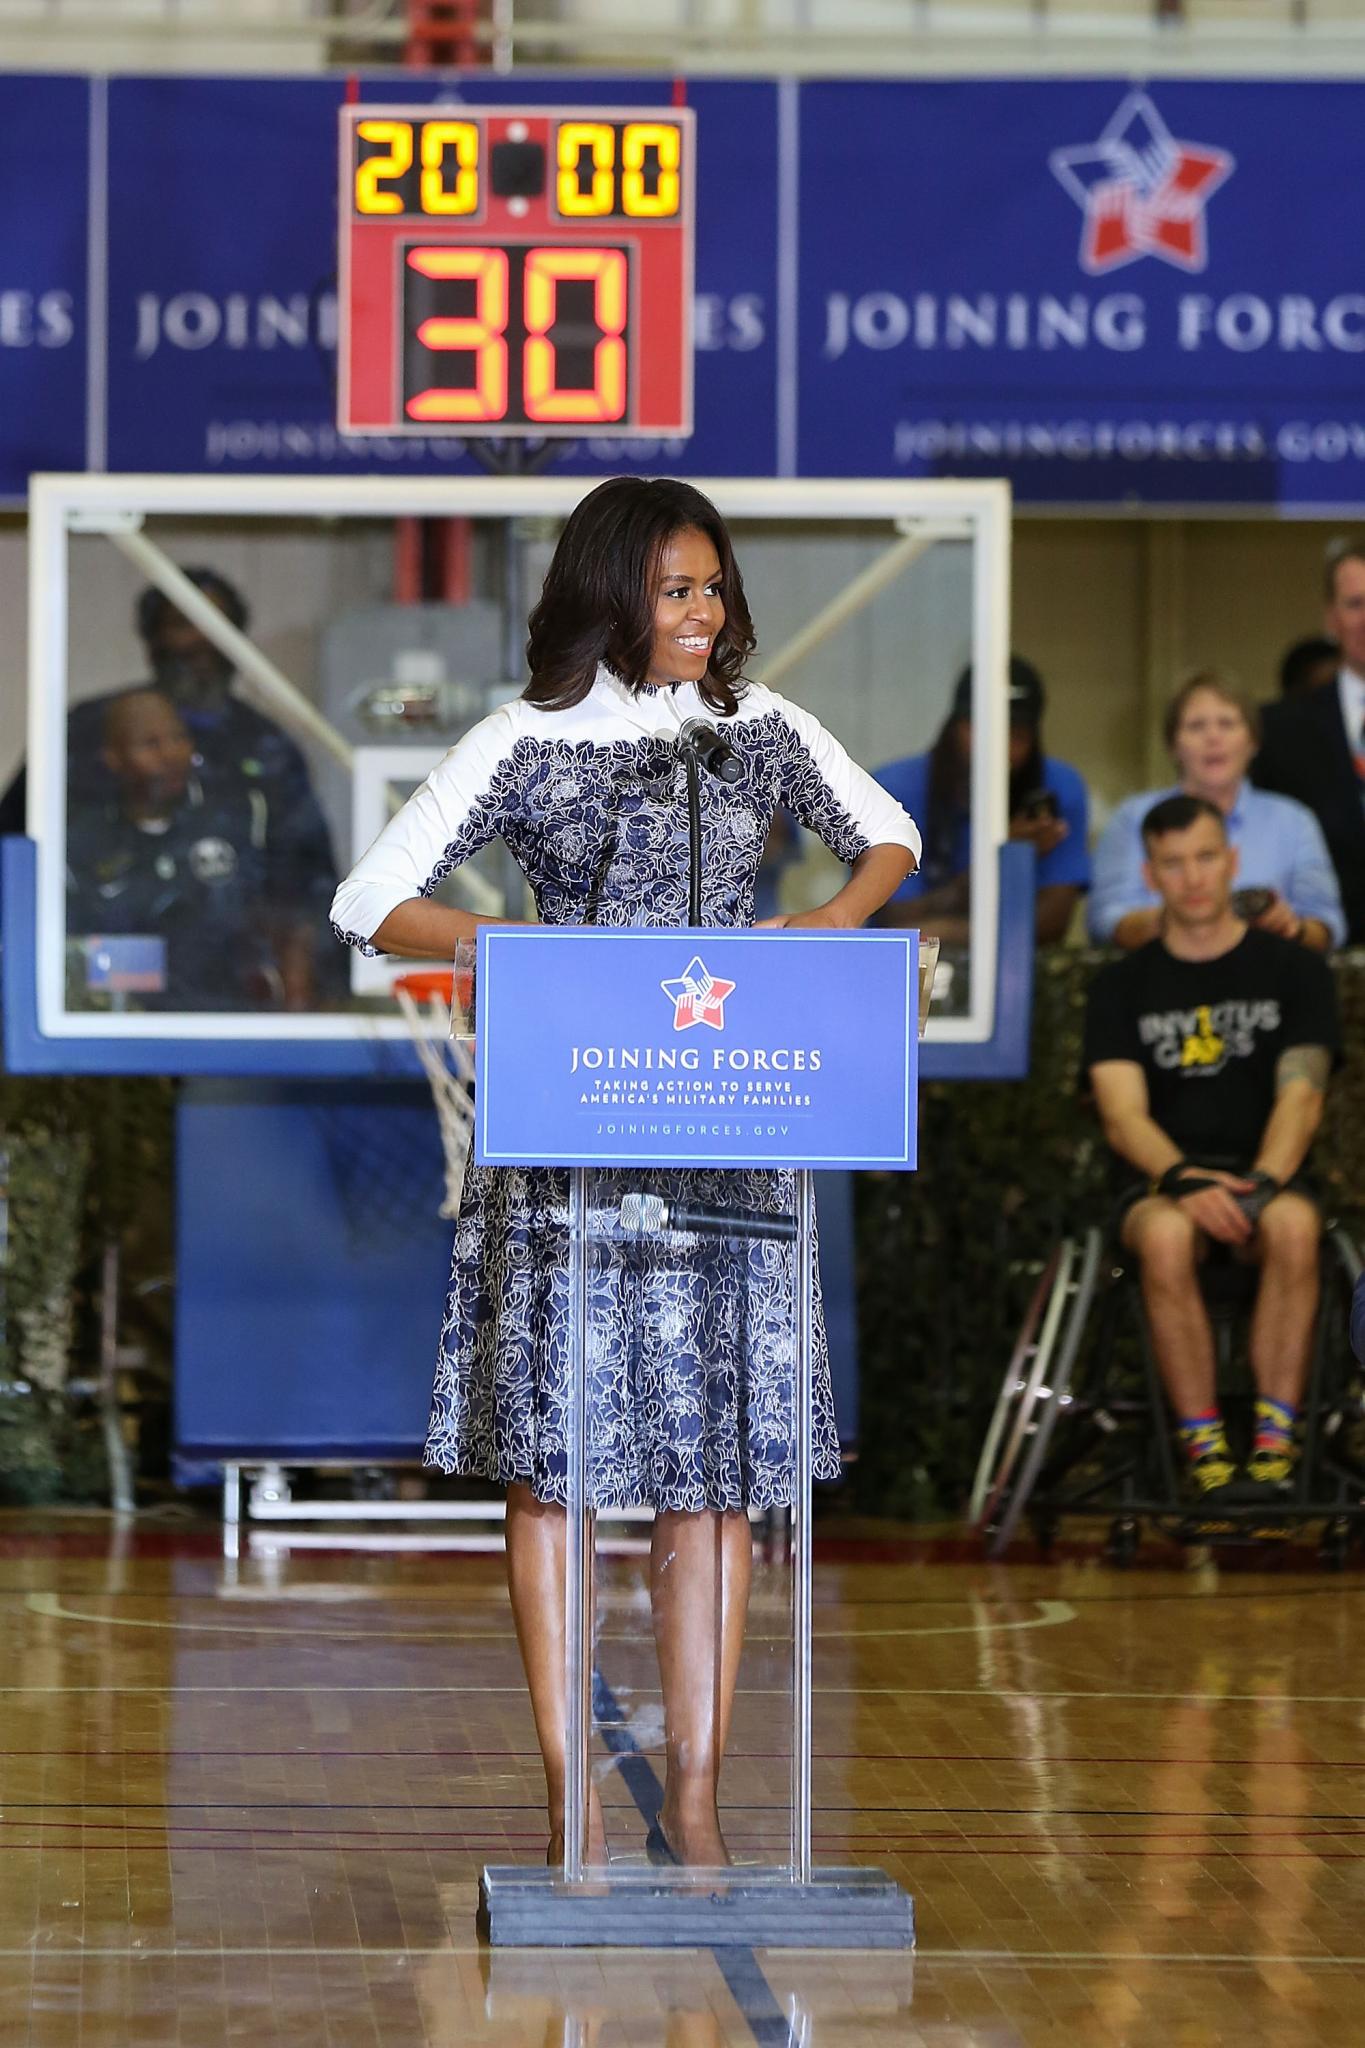 Michelle Obama, Gabrielle Union, Salt 'N' Pepa and More!
